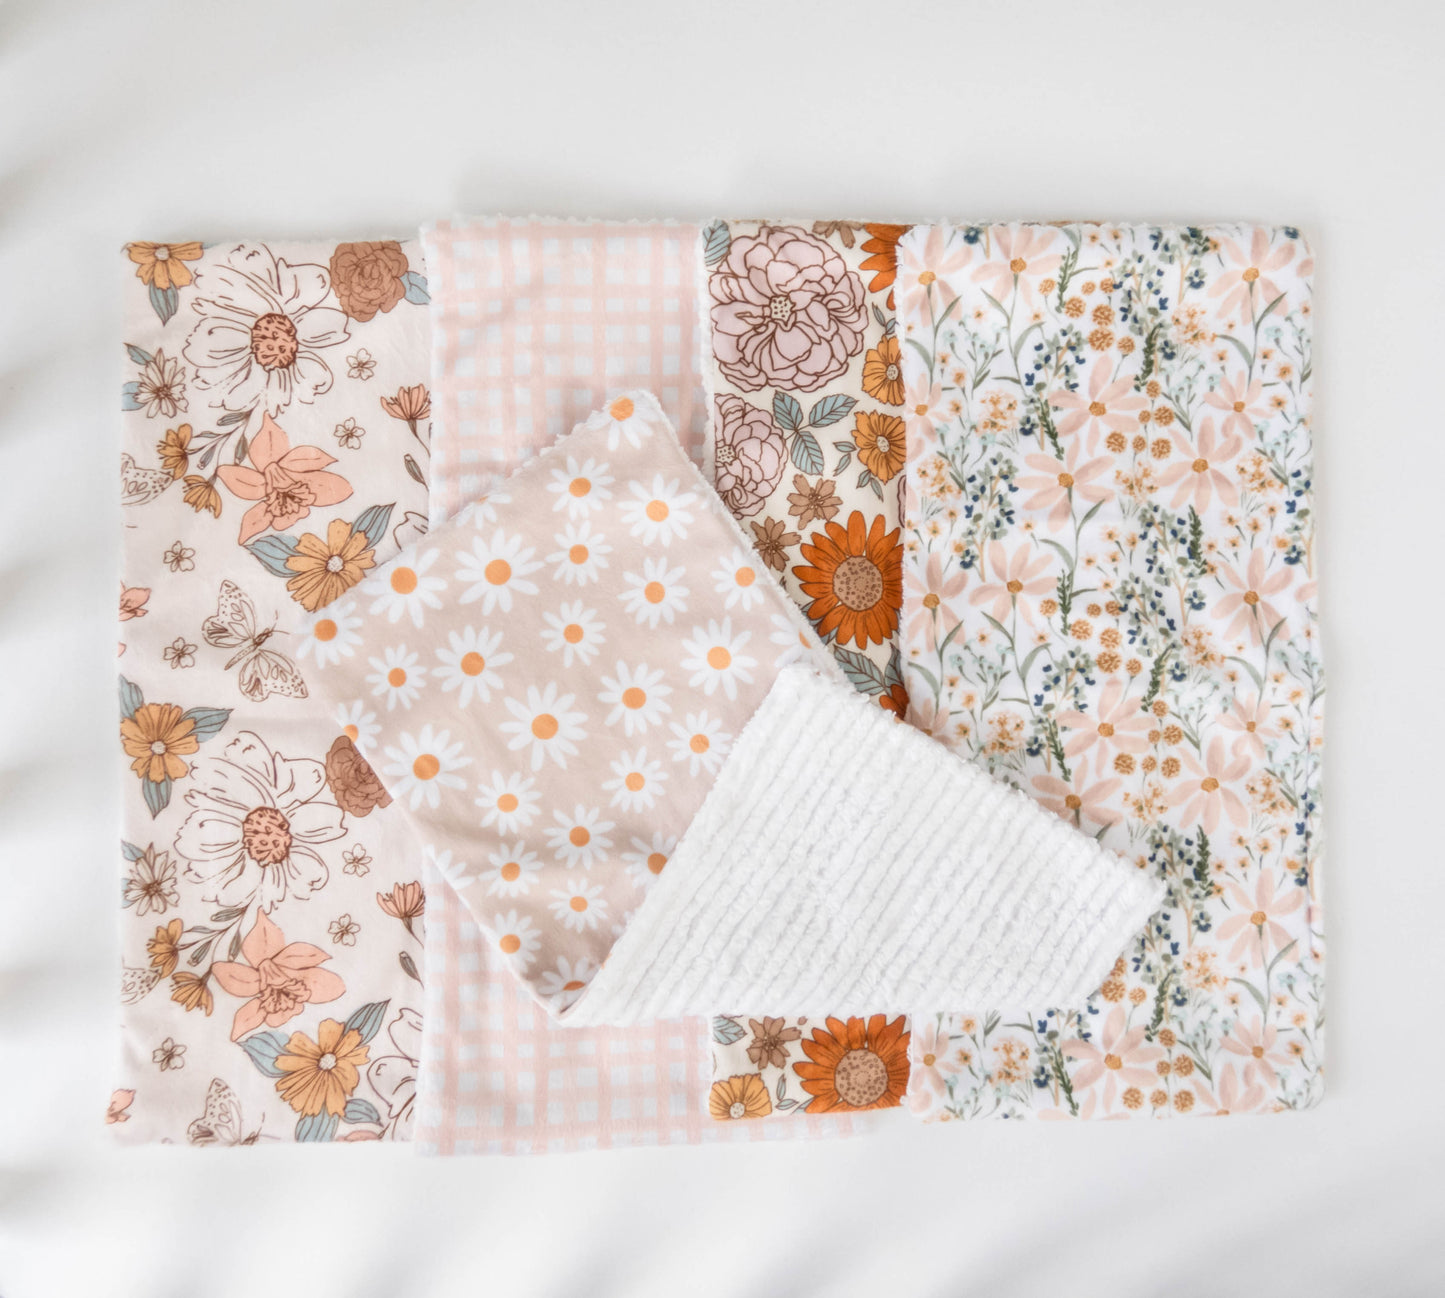 Daisy Dream Burp Cloth Set - Premium Minky Burp Cloths - Set of 5